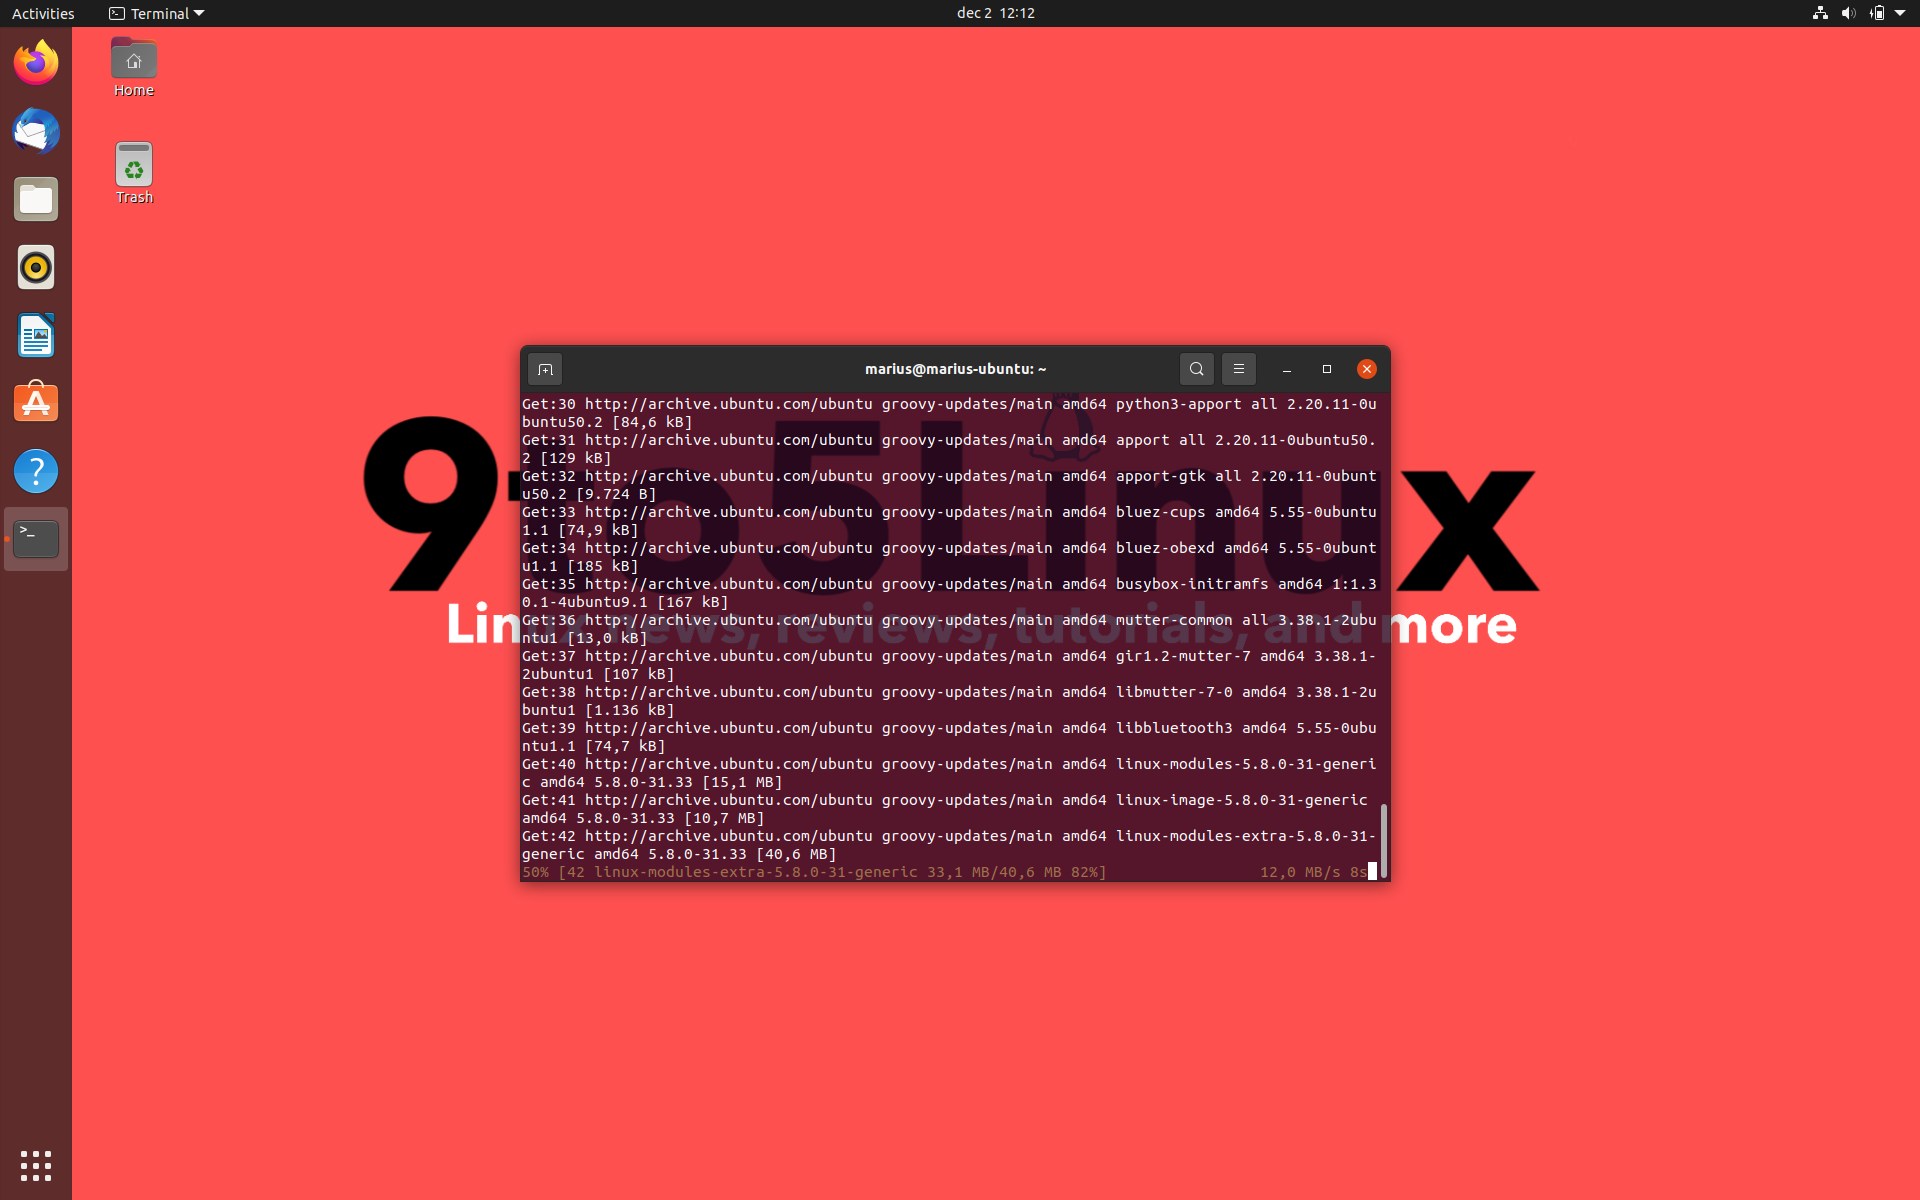 Ubuntu 6224-1: Linux kernel vulnerabilities